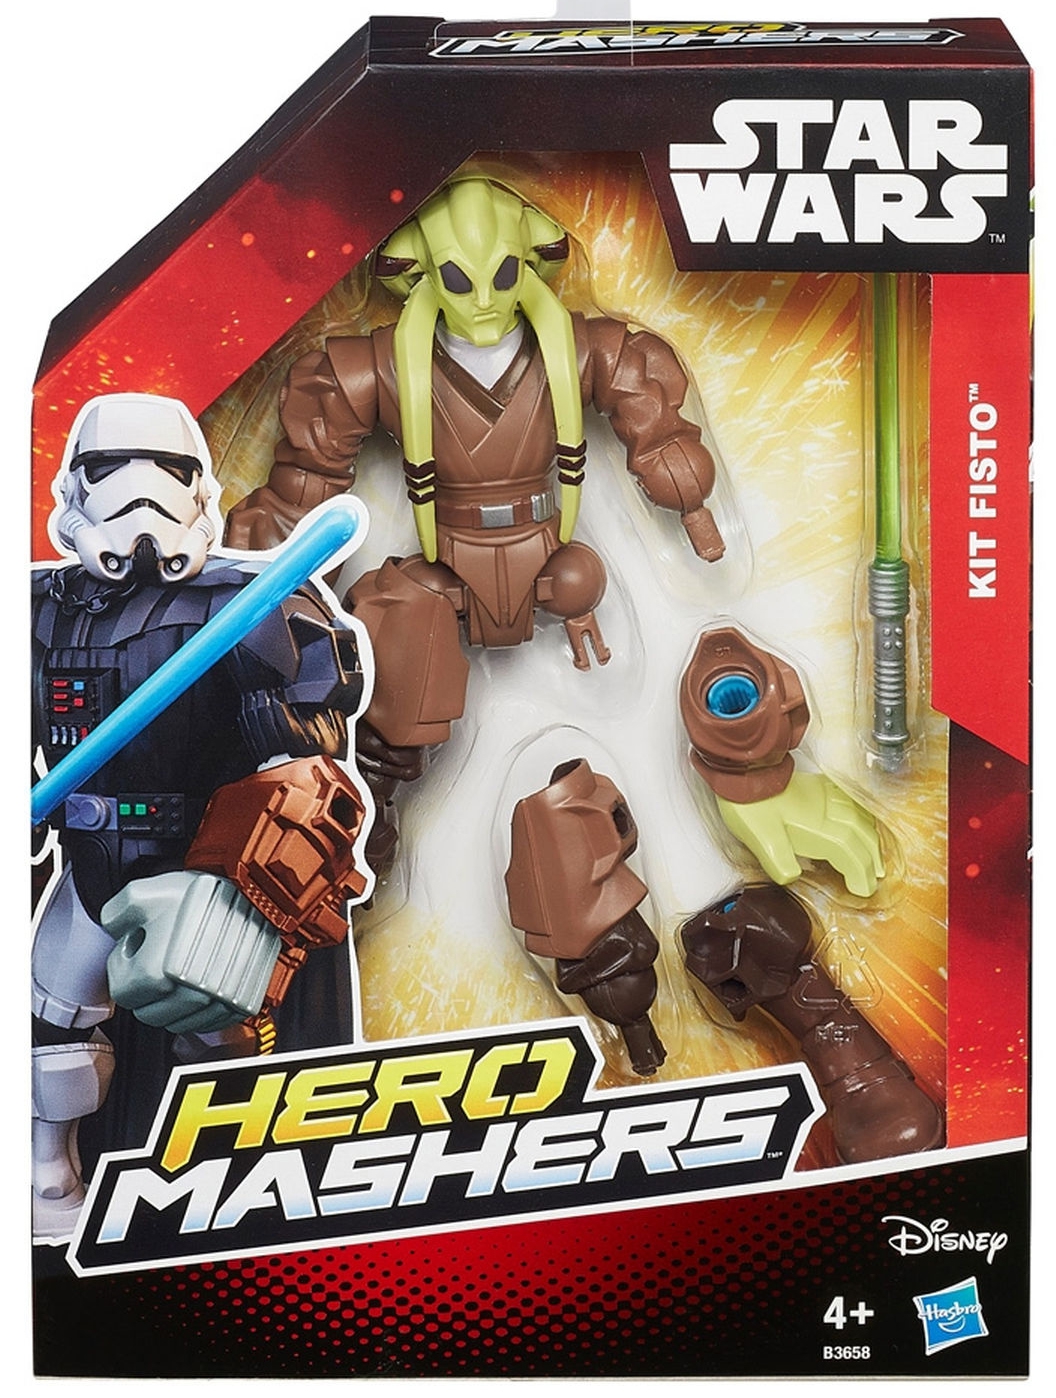 Disney Star Wars 'Kit Fisto' Hero Mashers 6 inch Figure Toy